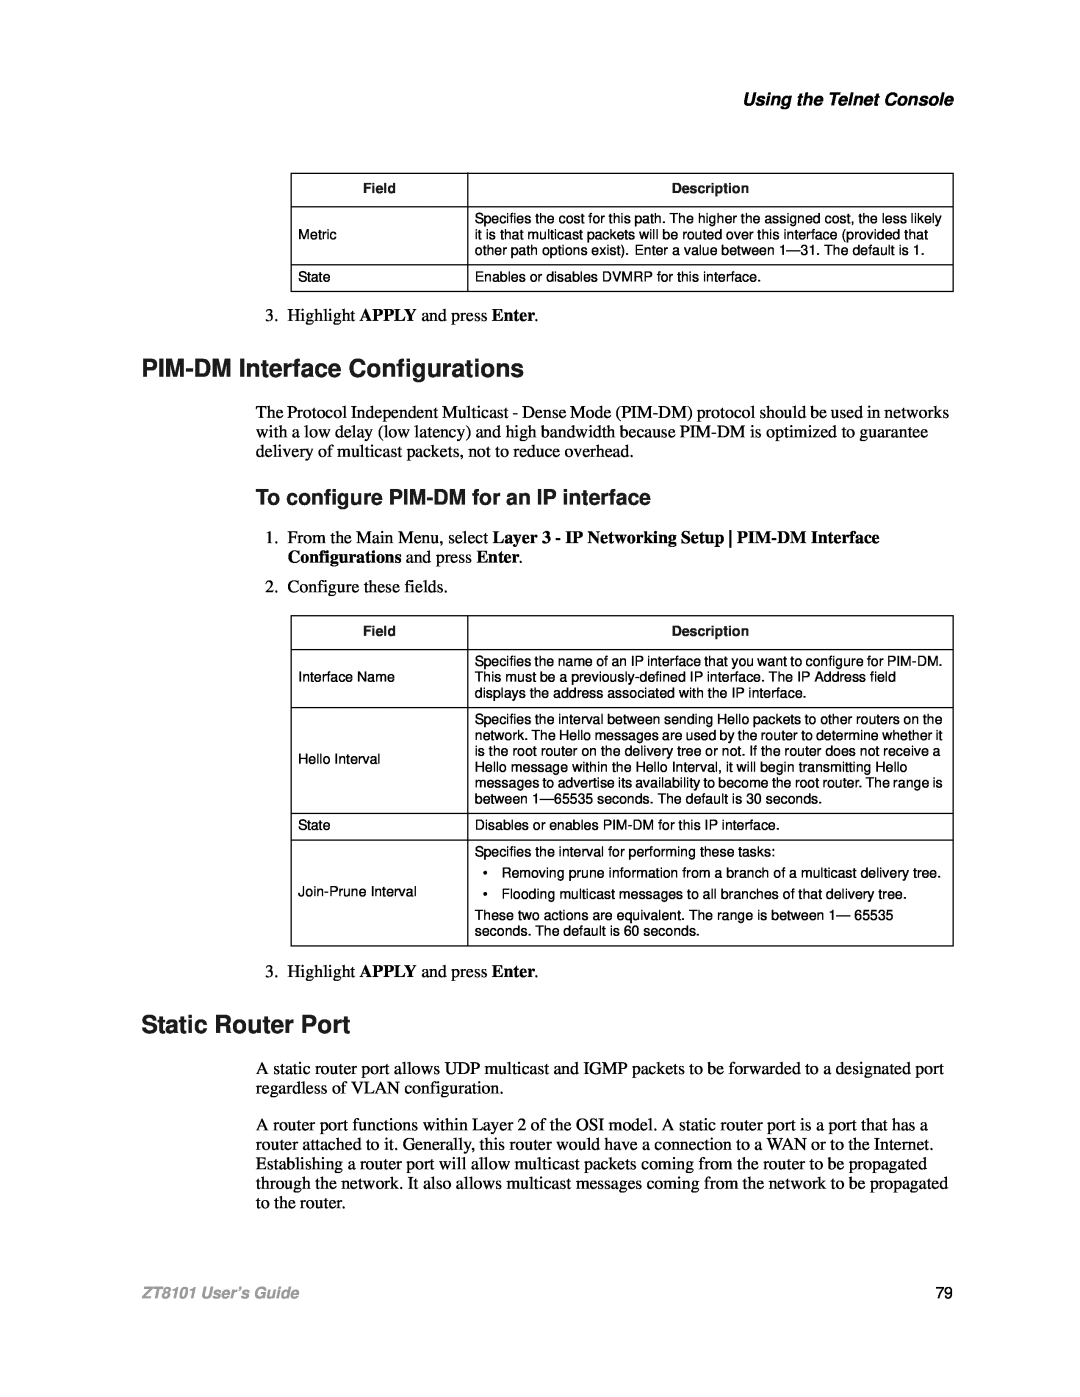 Intel ZT8101 user manual PIM-DMInterface Configurations, Static Router Port, To configure PIM-DMfor an IP interface 